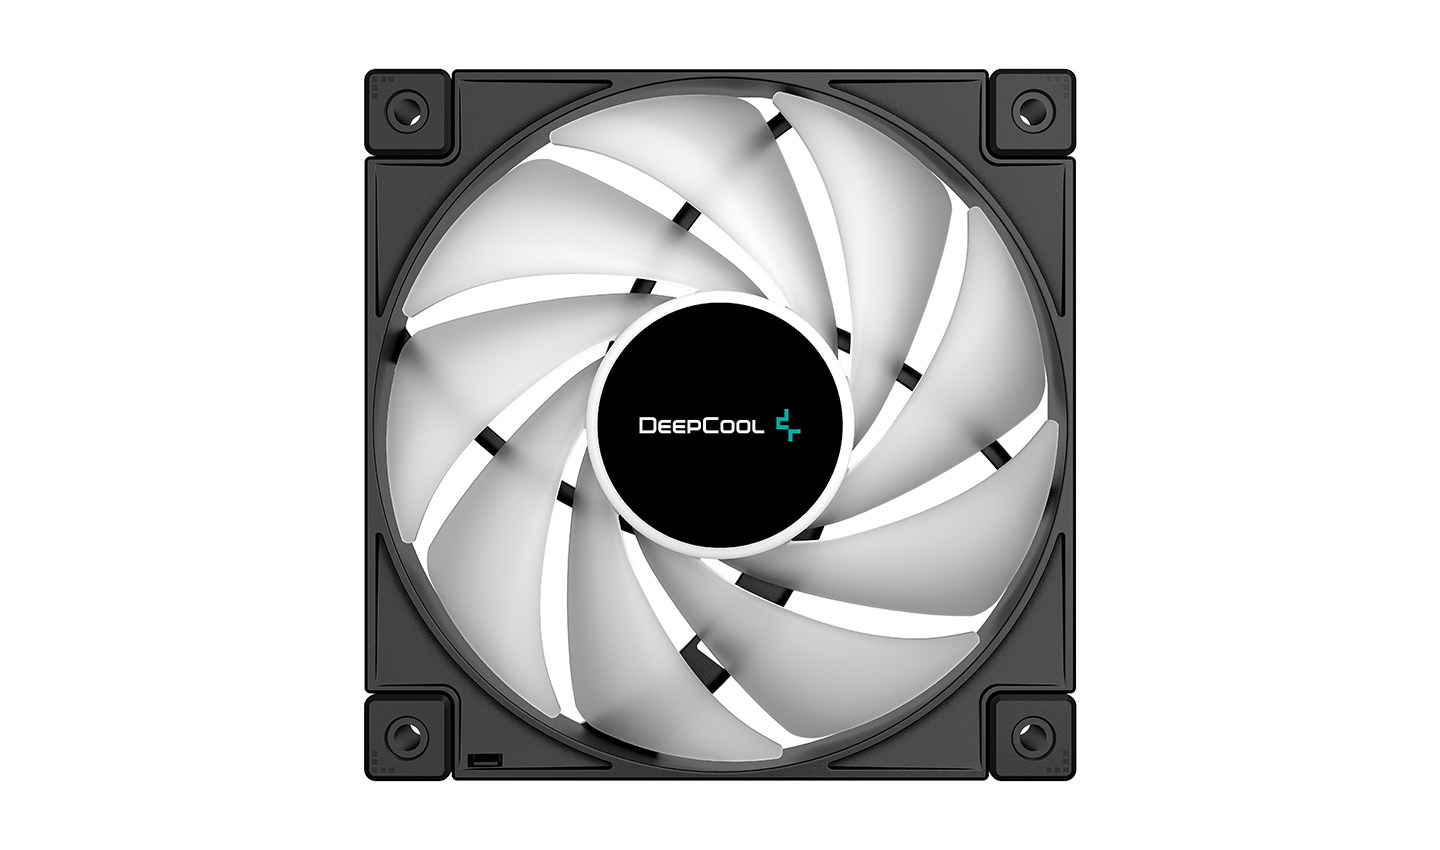 Deepcool - Ventoínhas Deepcool FC120 PWM RGB